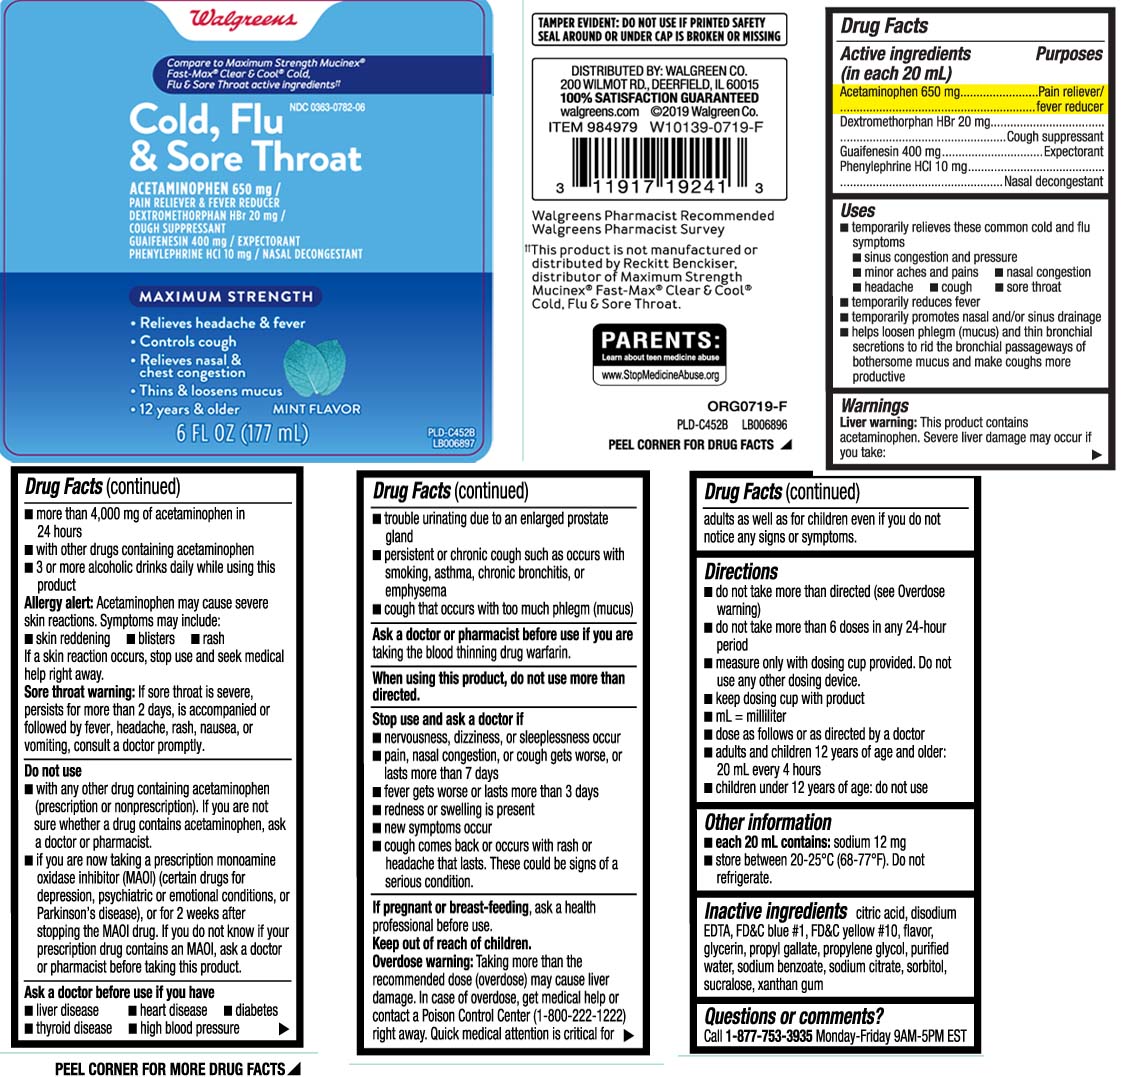 Acetaminophen 650 mg, Dextromethorphan HBr20 mg, Guaifenesin 400 mg, Phenylephrine HCL 10 mg